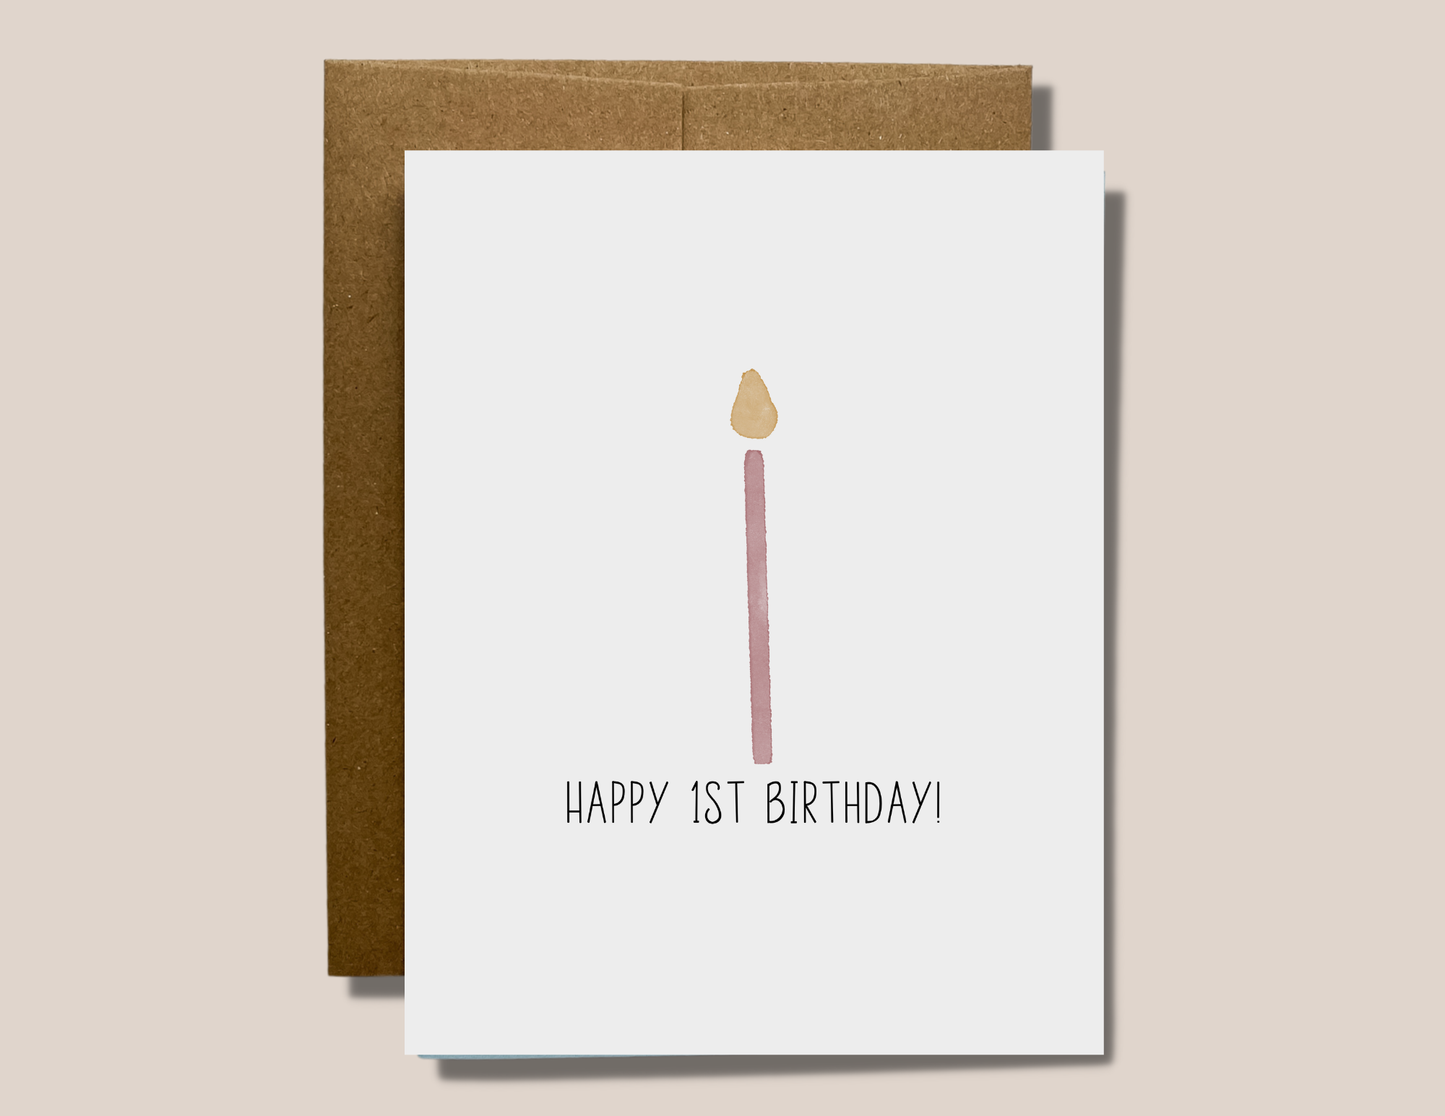 Happy 1st Birthday! - Blush Candle